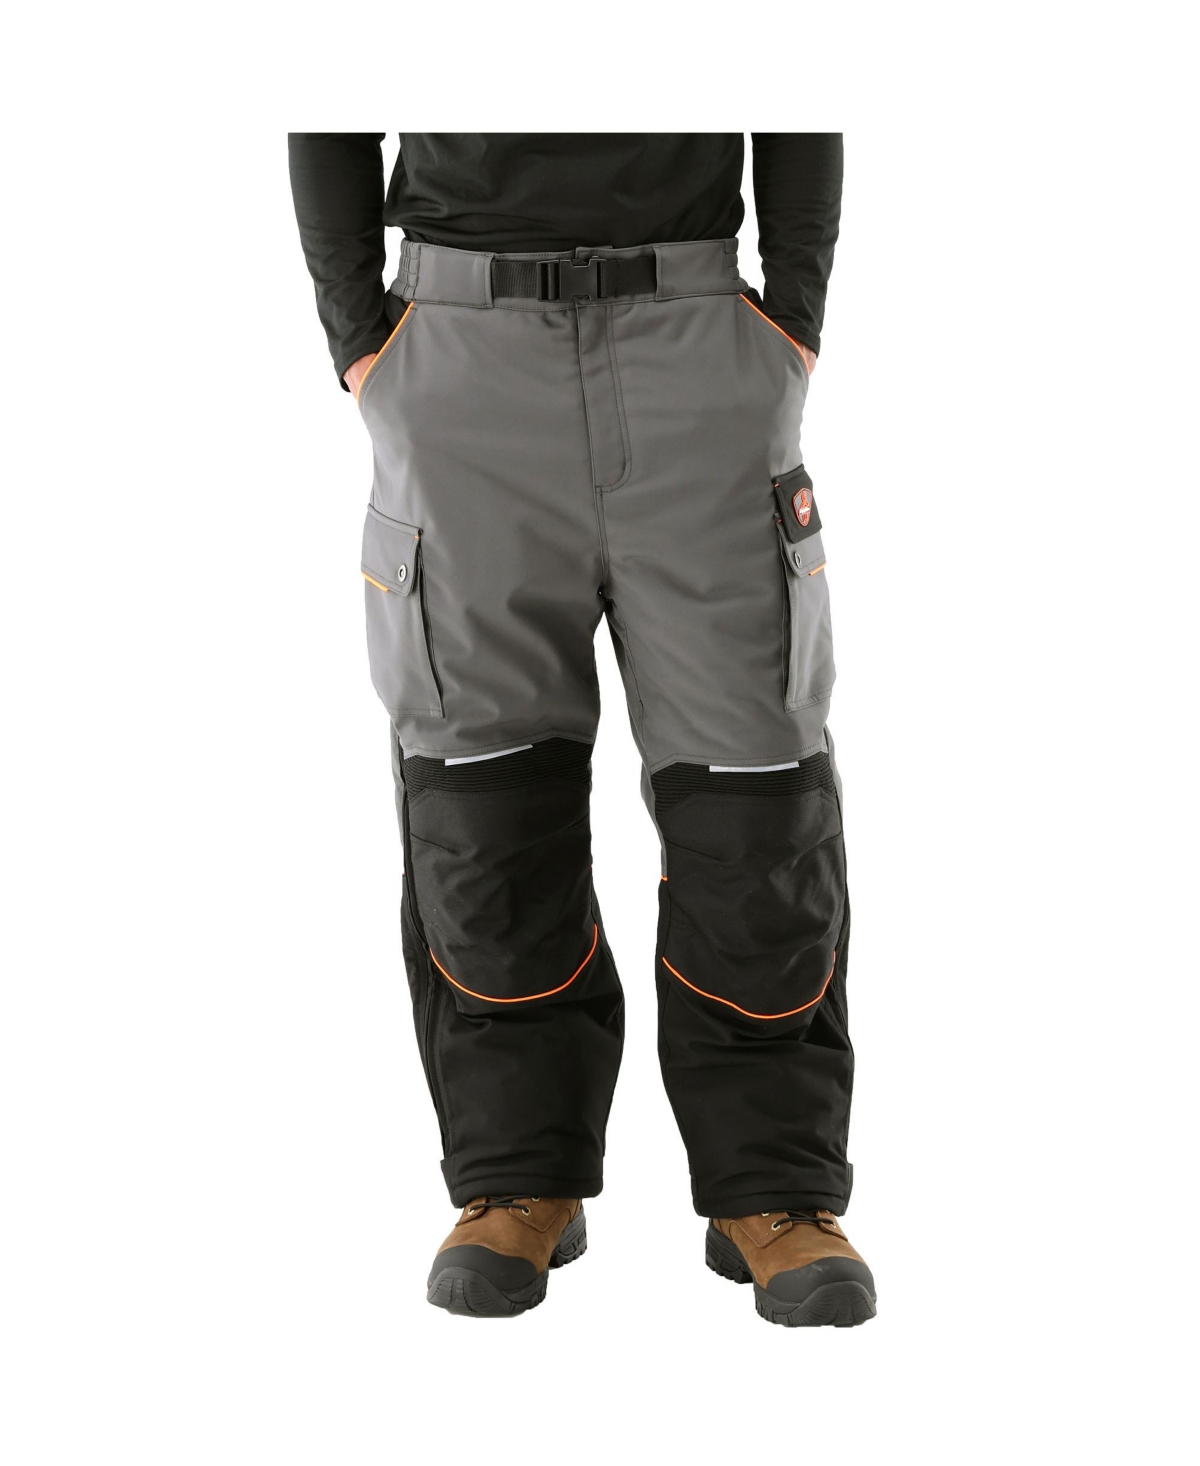 Men's PolarForce Insulated Pants - Charcoal